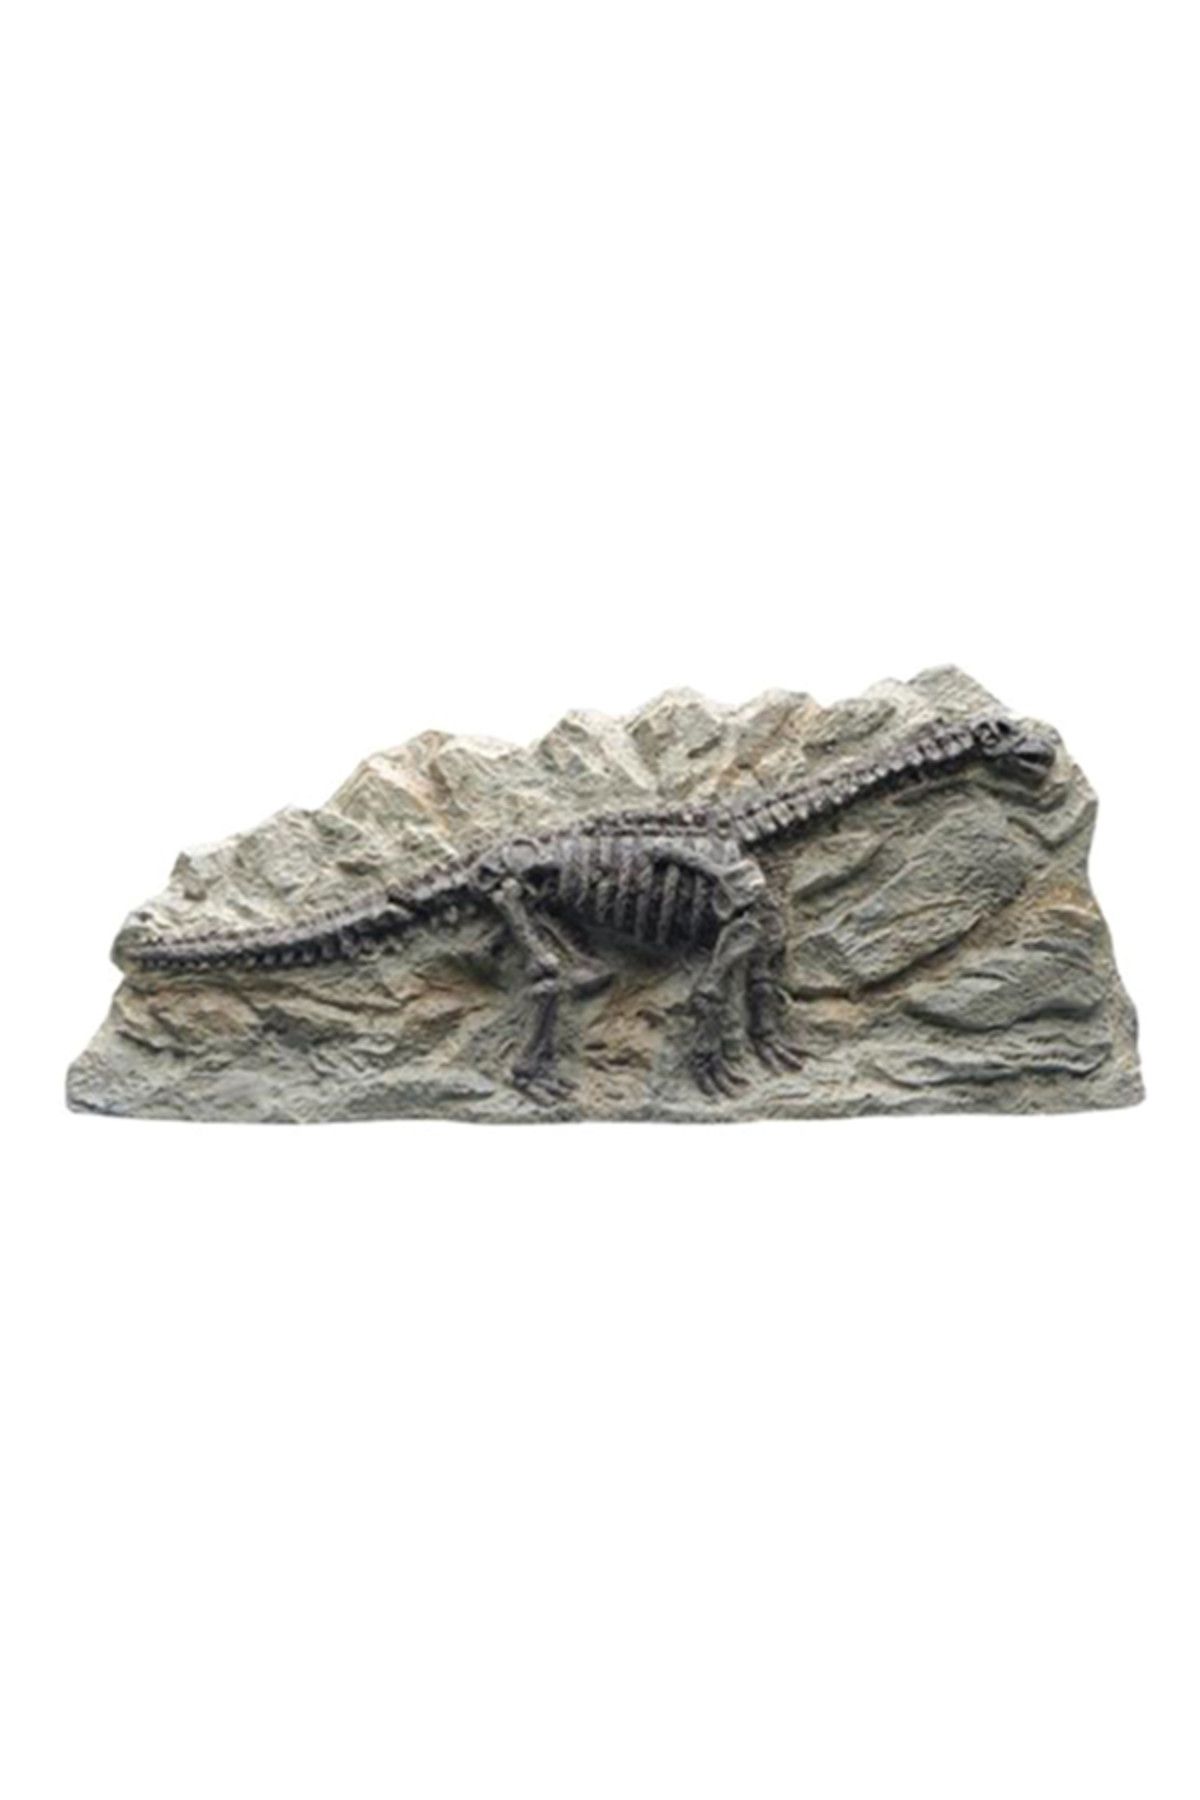 Marina Dekoratif Fosil Brontosaurus 20,3x5x8,3 cm 015561123471